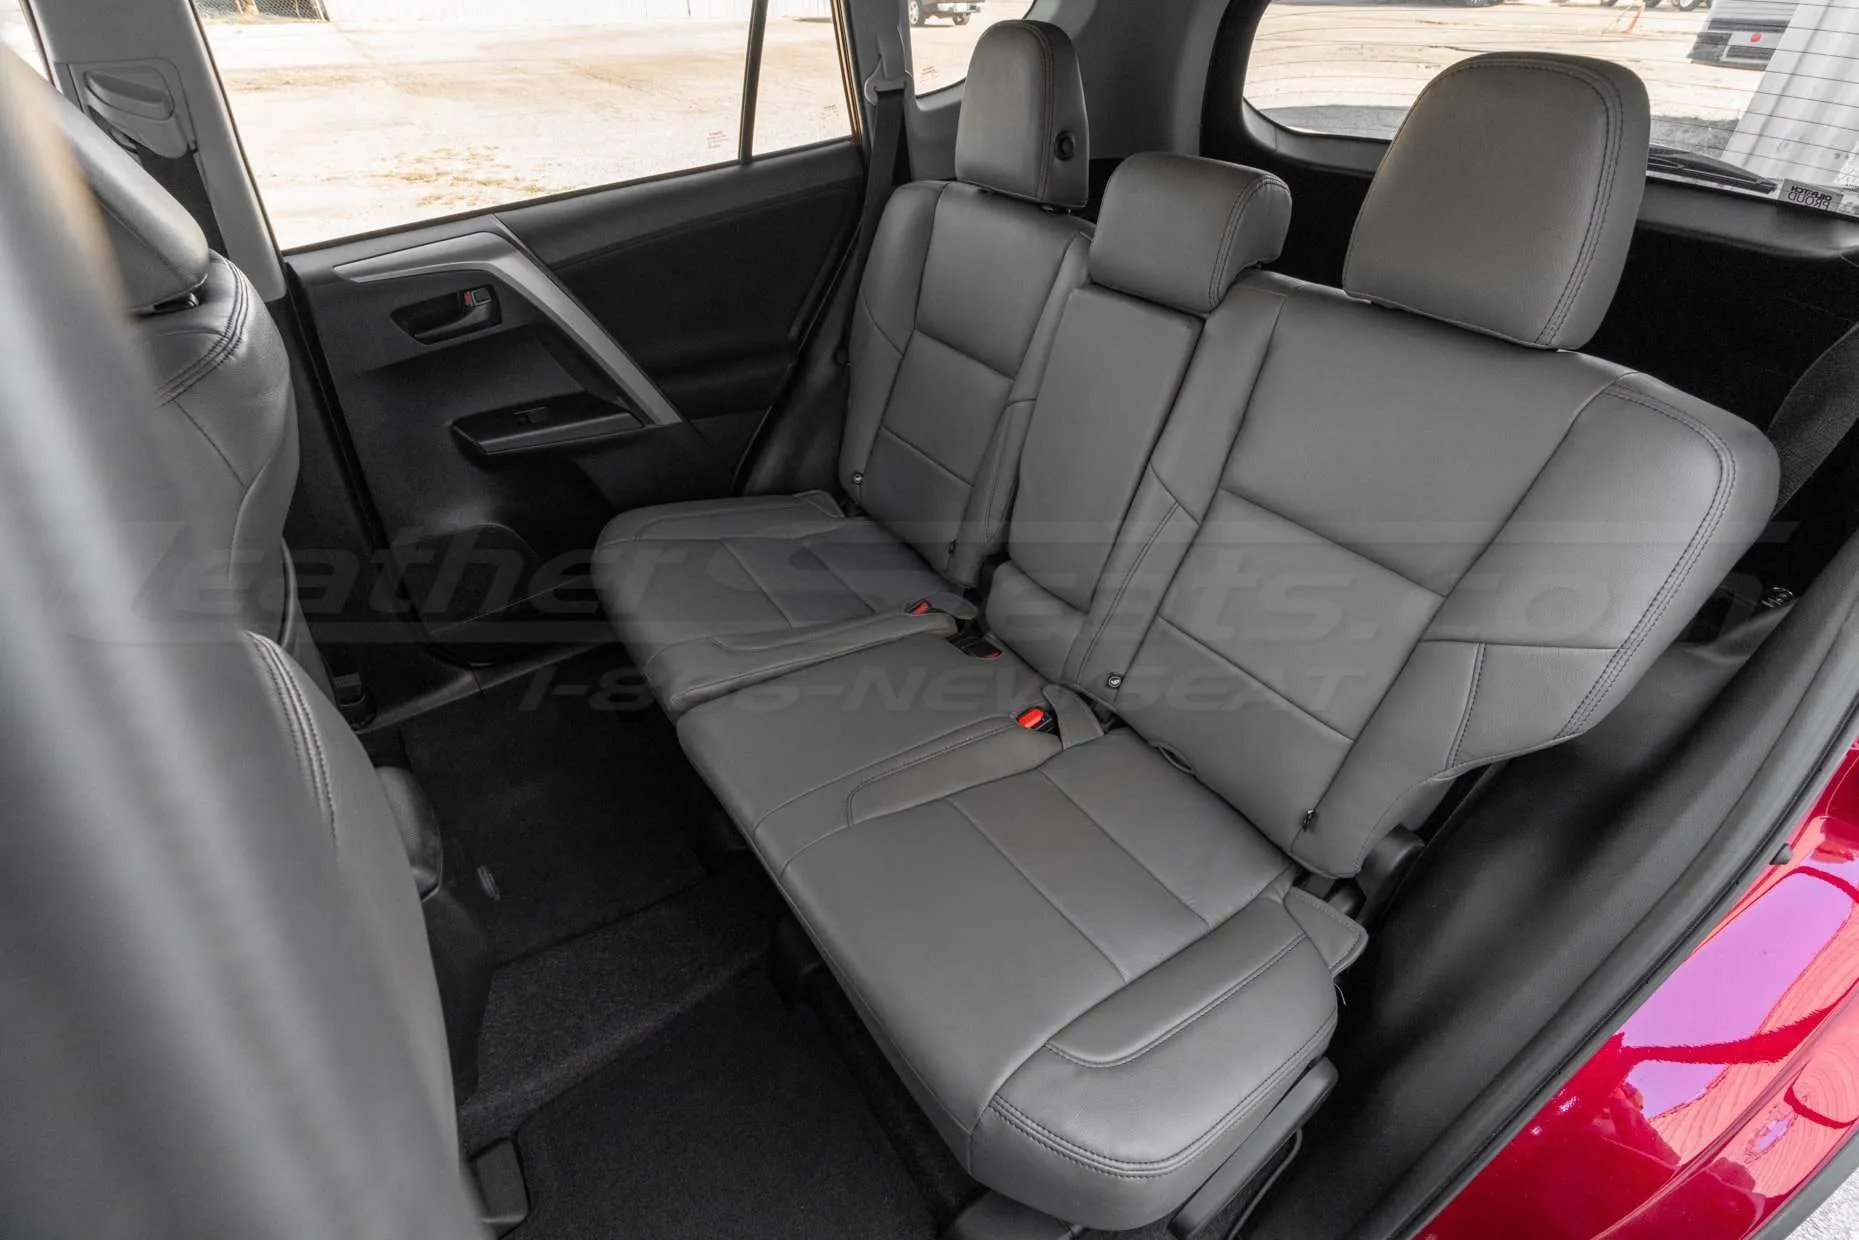 Toyota RAV4 custom installed leather seats in Light Grey - Rear seats fro driver side